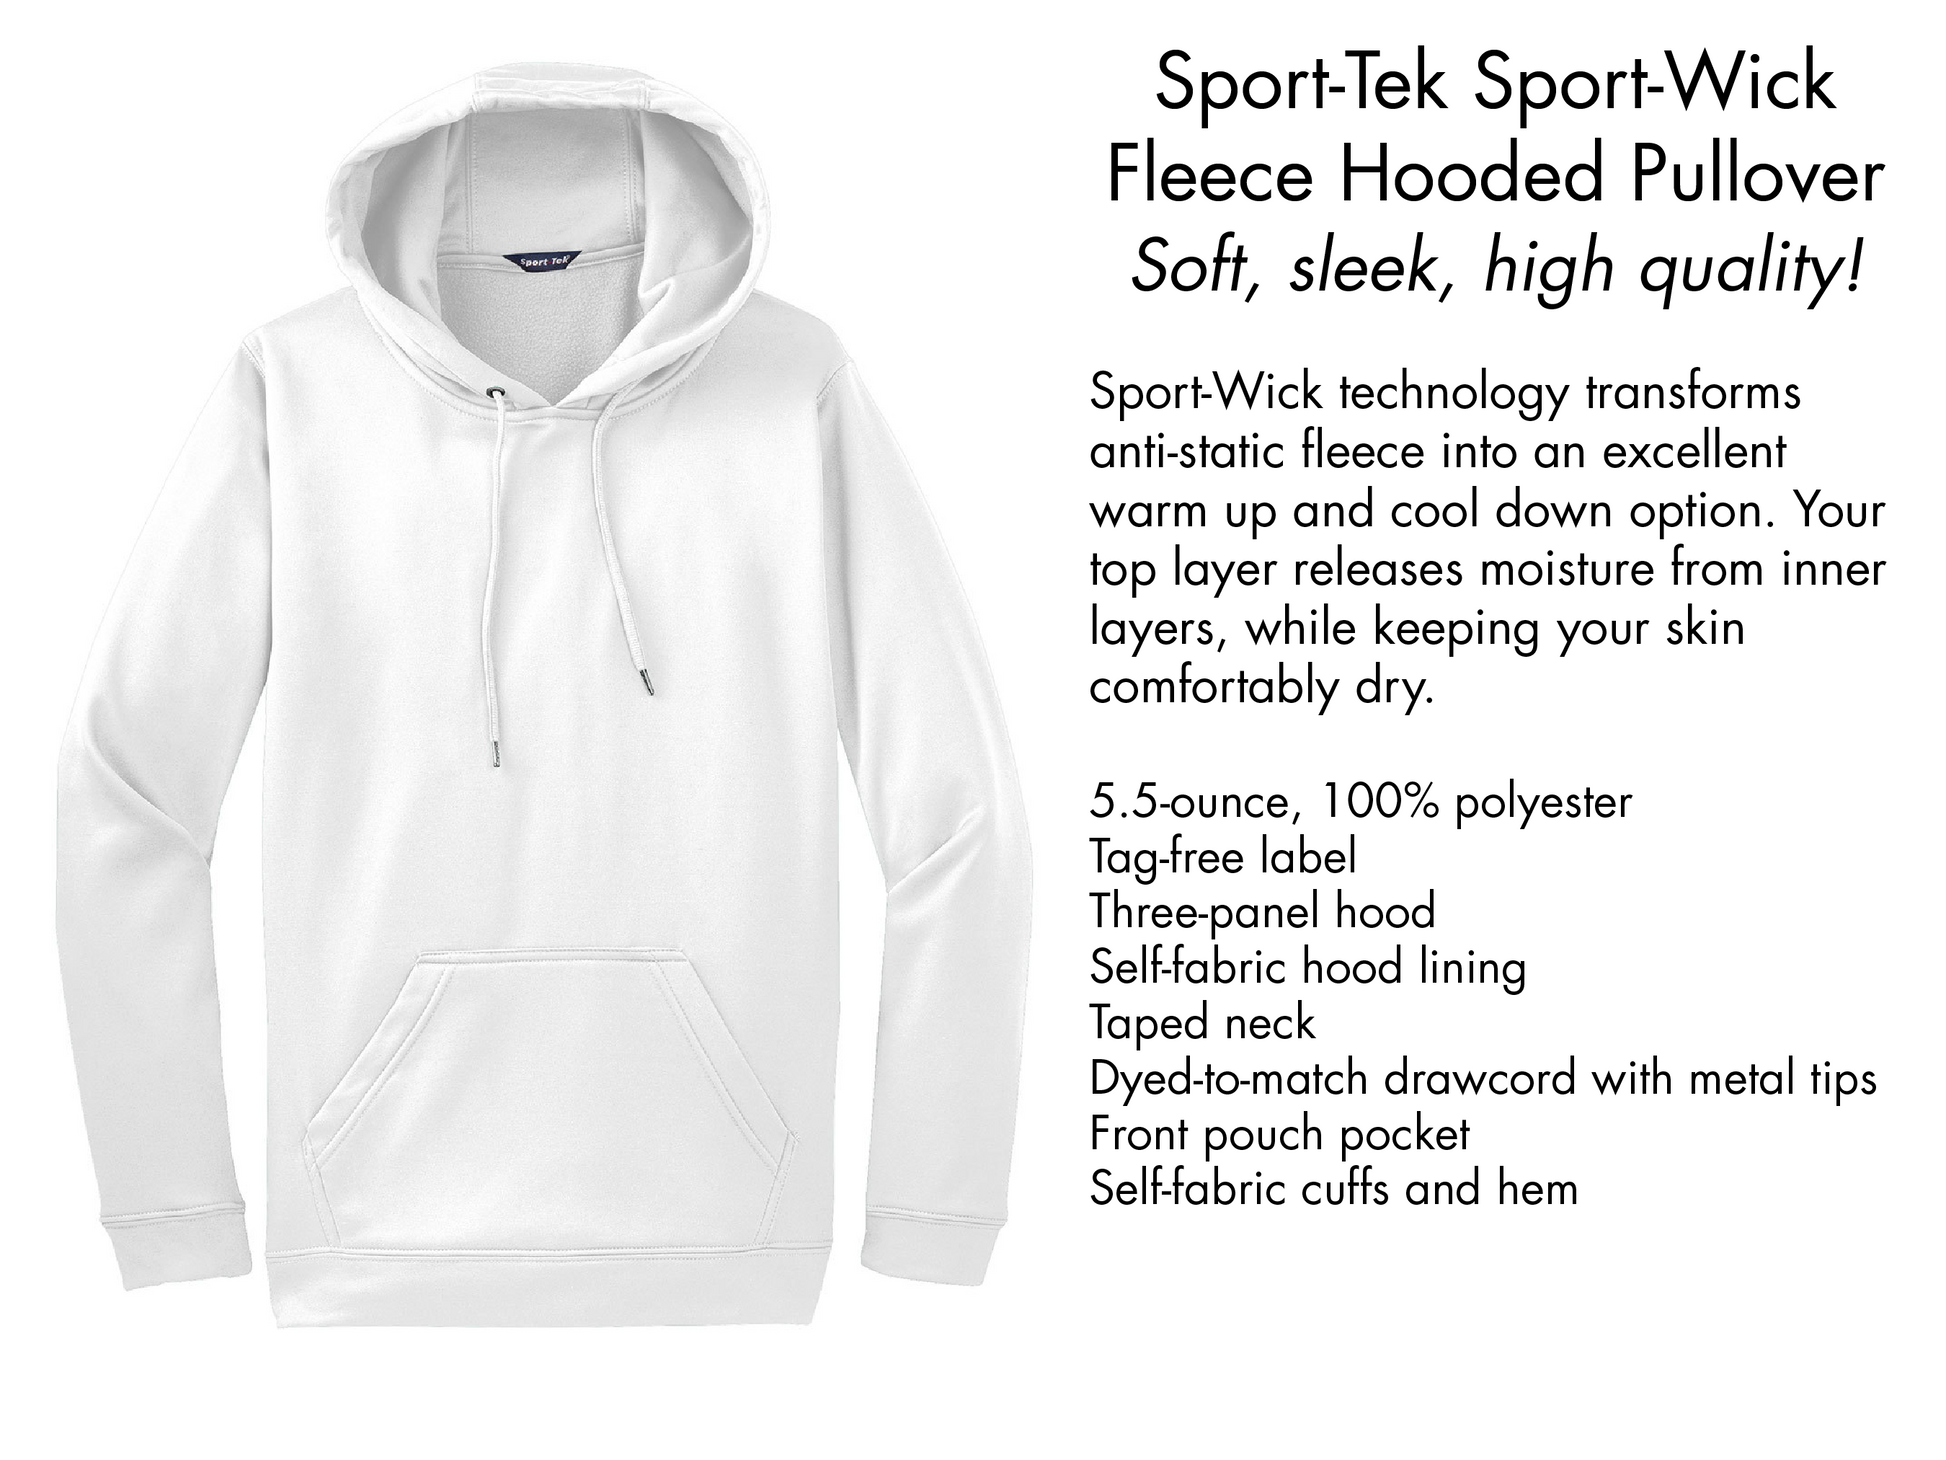 Product information for Sport-Tek Sport-Wick Fleece Hoodie - Premium quality sublimatable hoodie